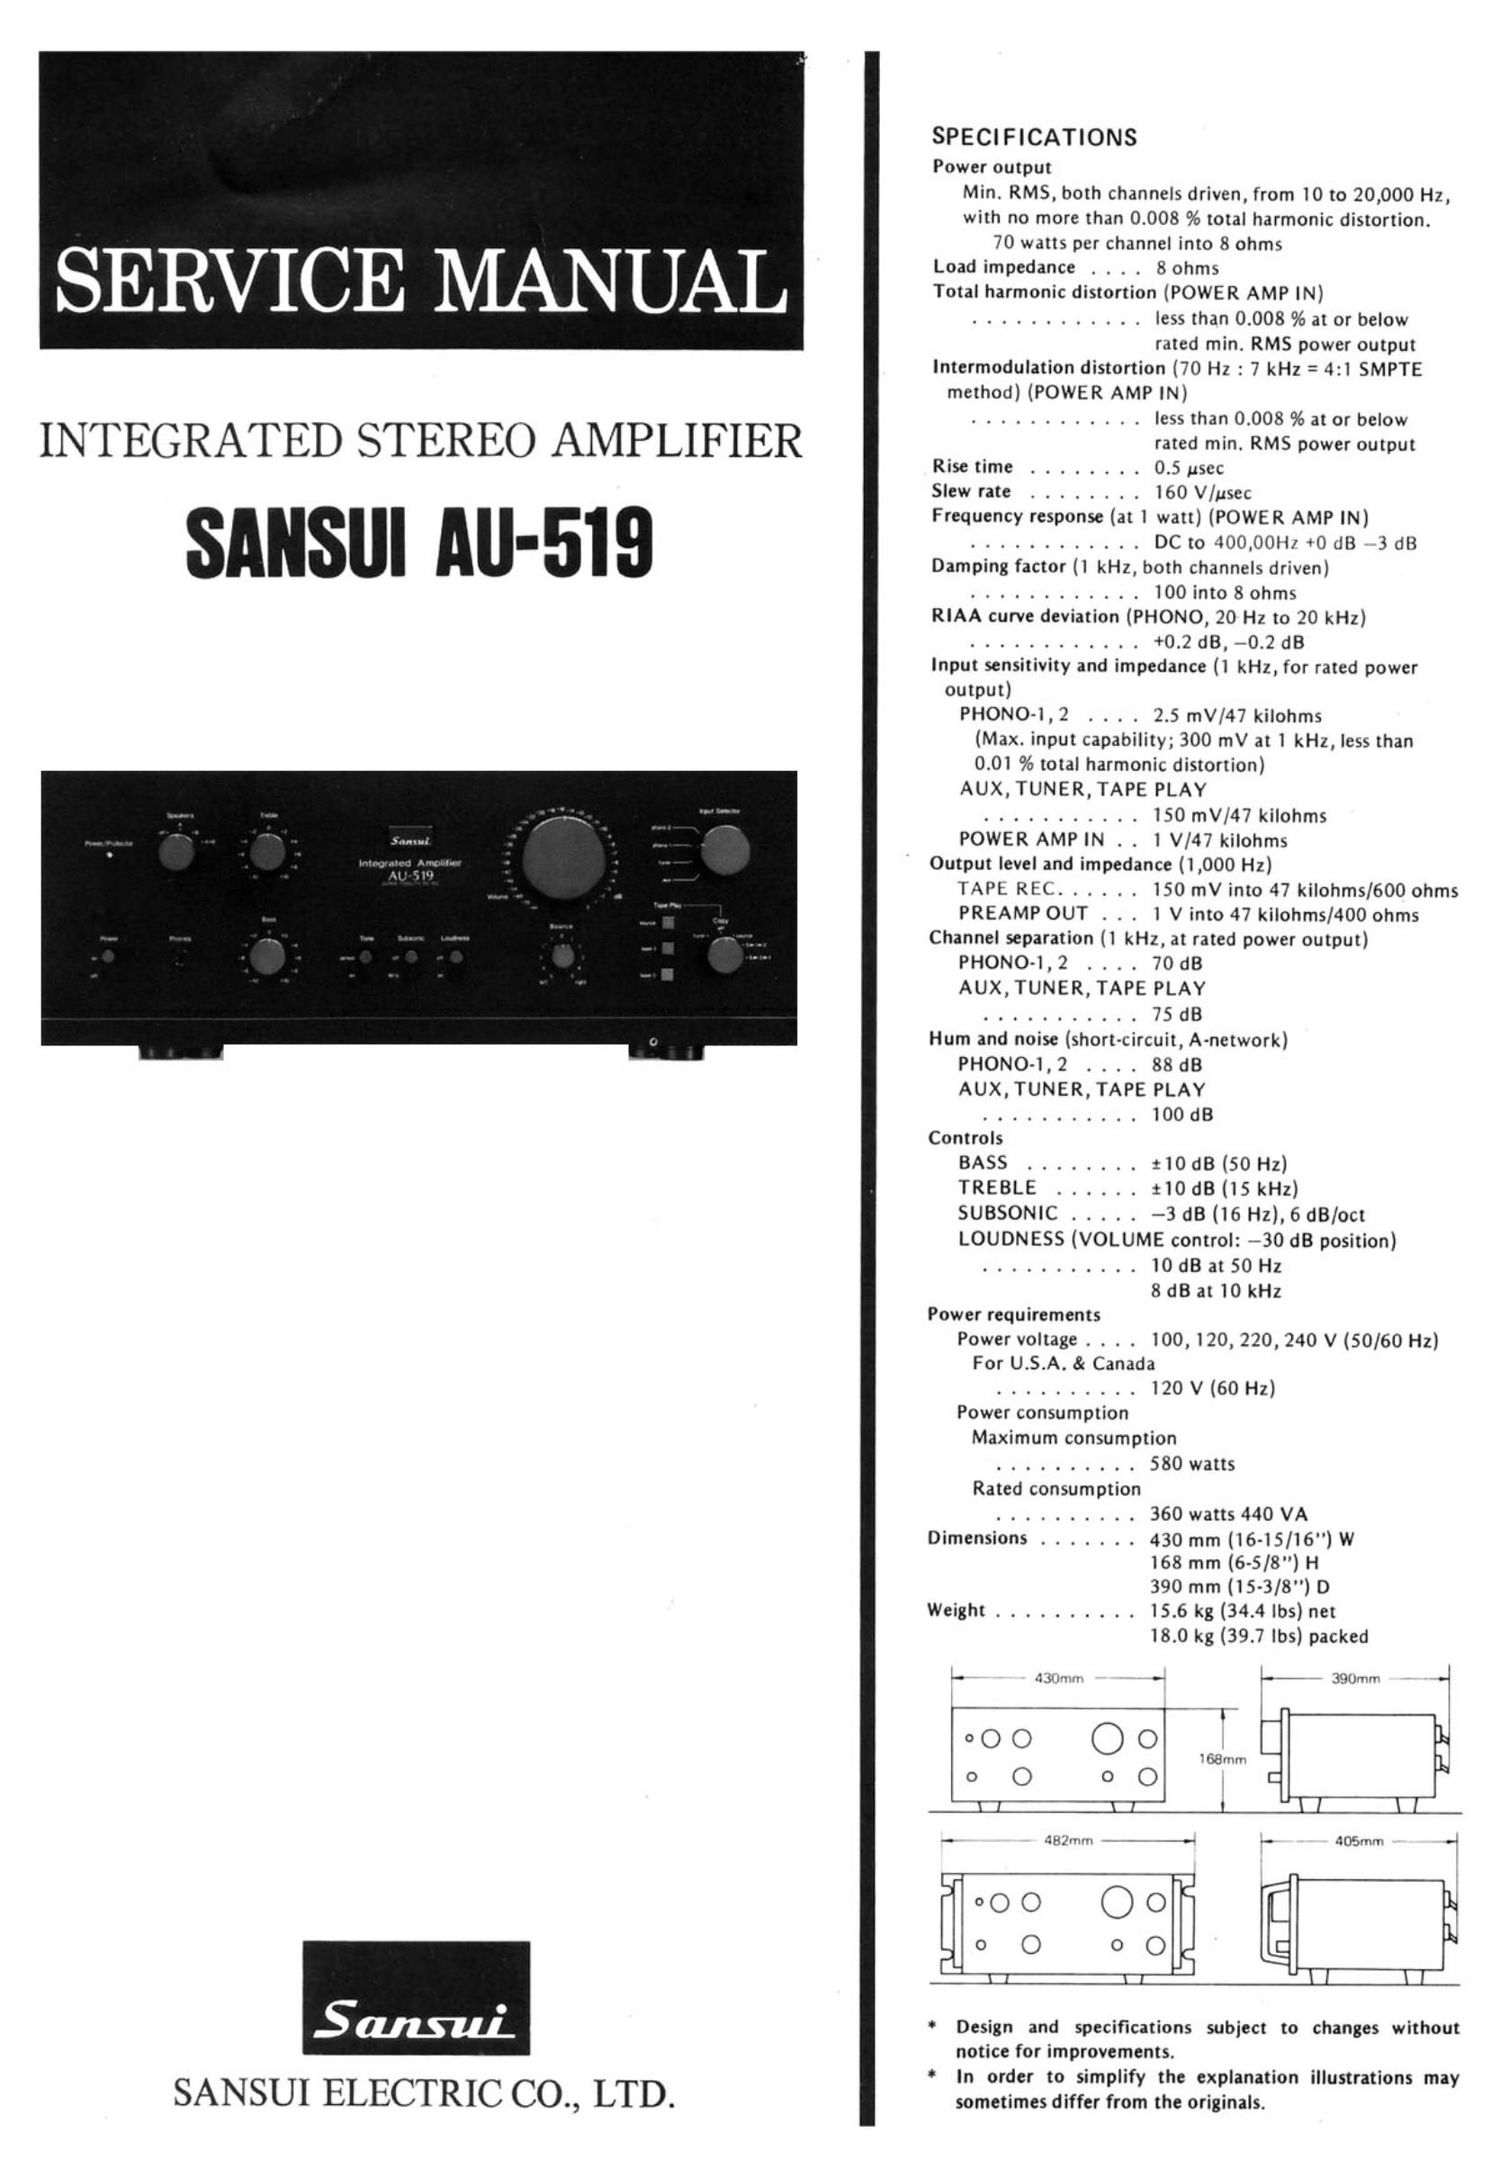 Sansui AU 519 Service Manual